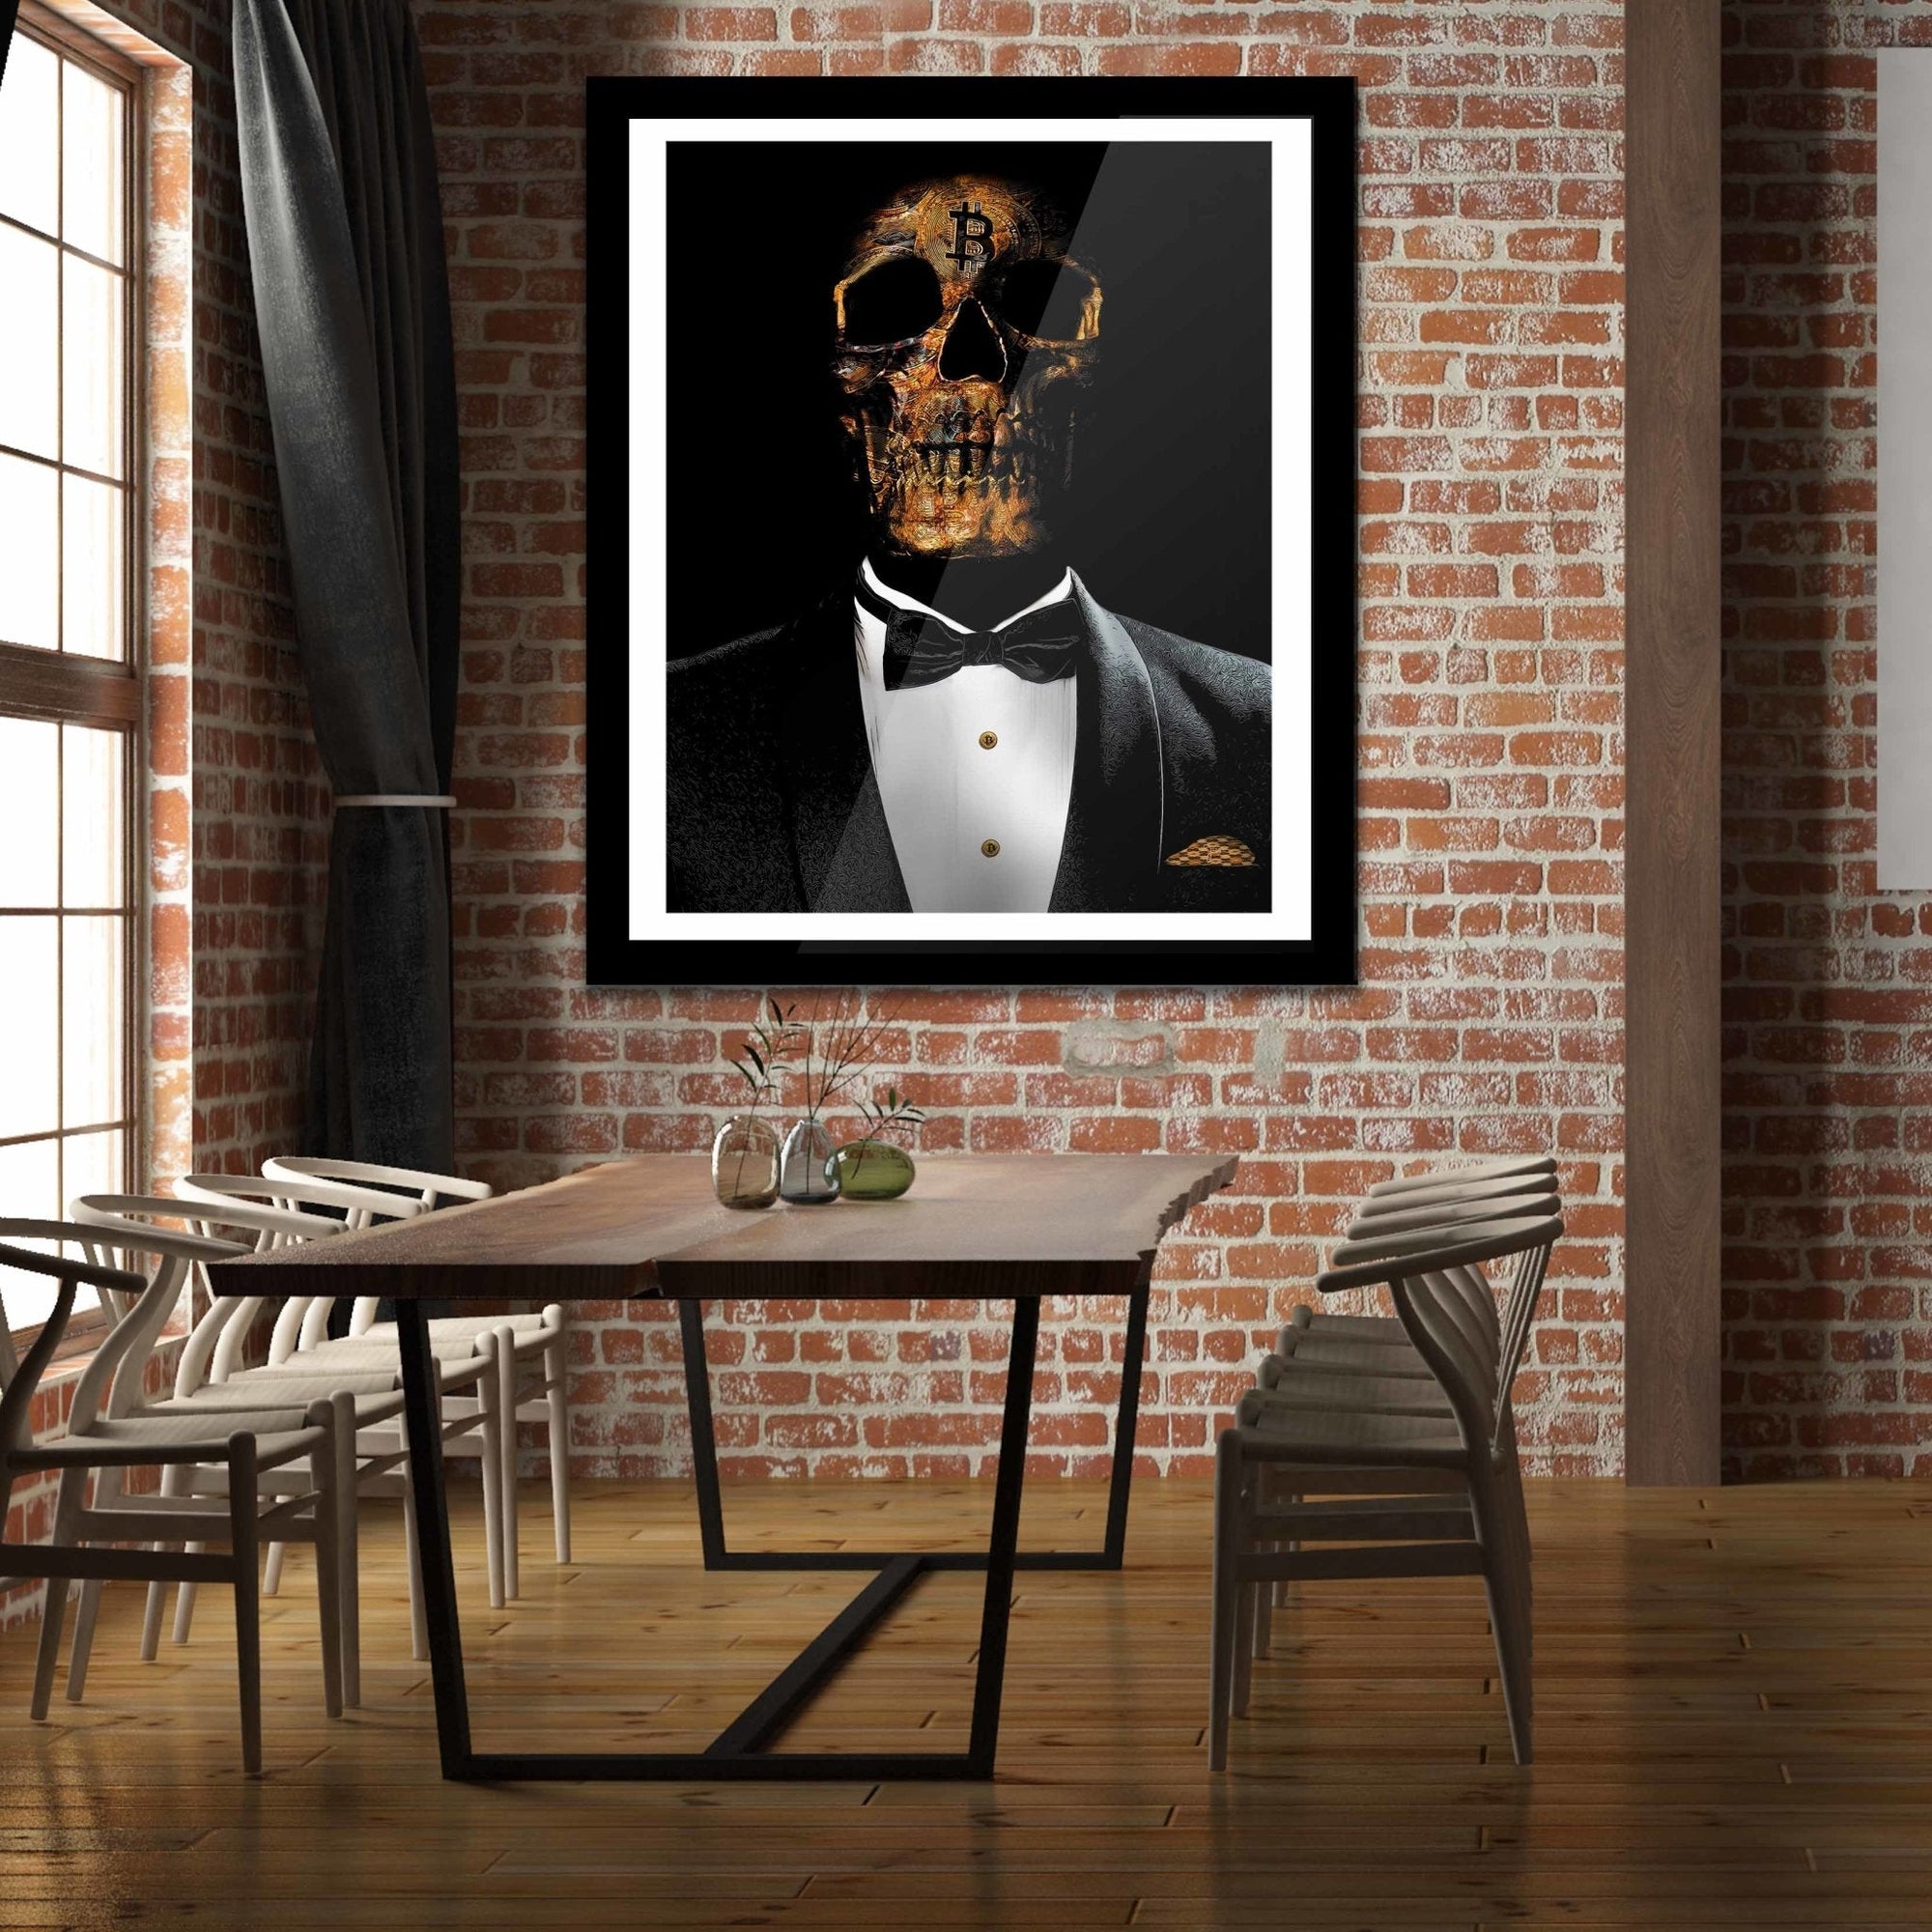 The Investor Skull Semi-gloss Print - Luxury Wall Art